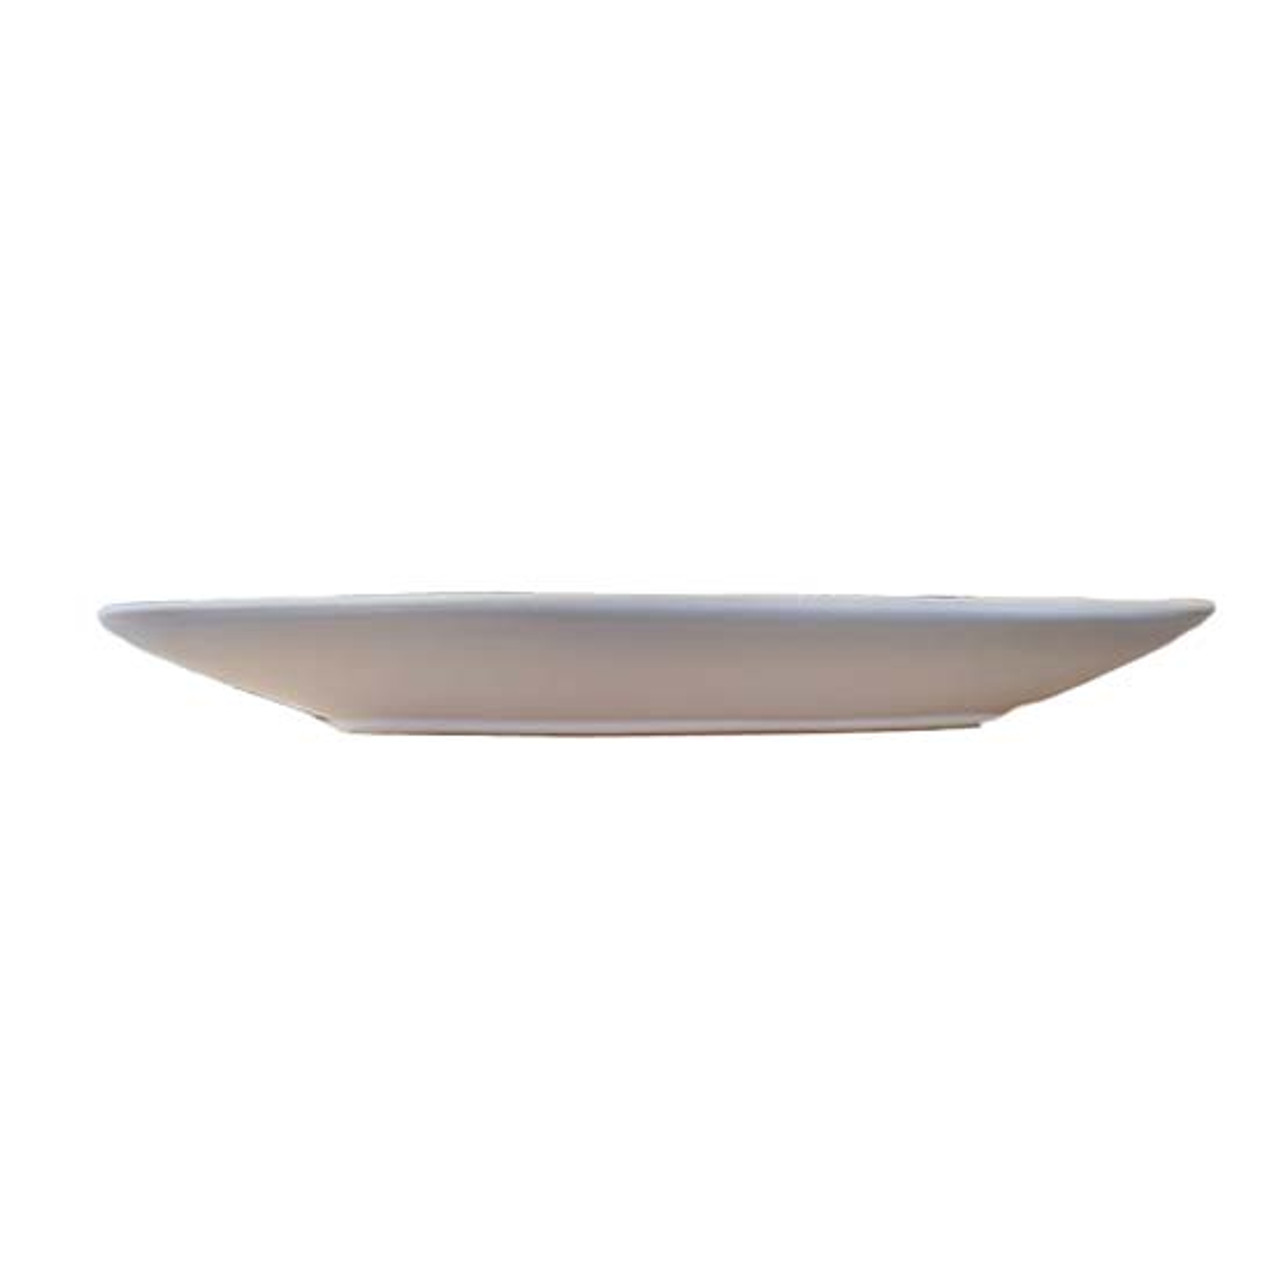 Soho Medium Rectangular Plate Stone 28 x 15cm